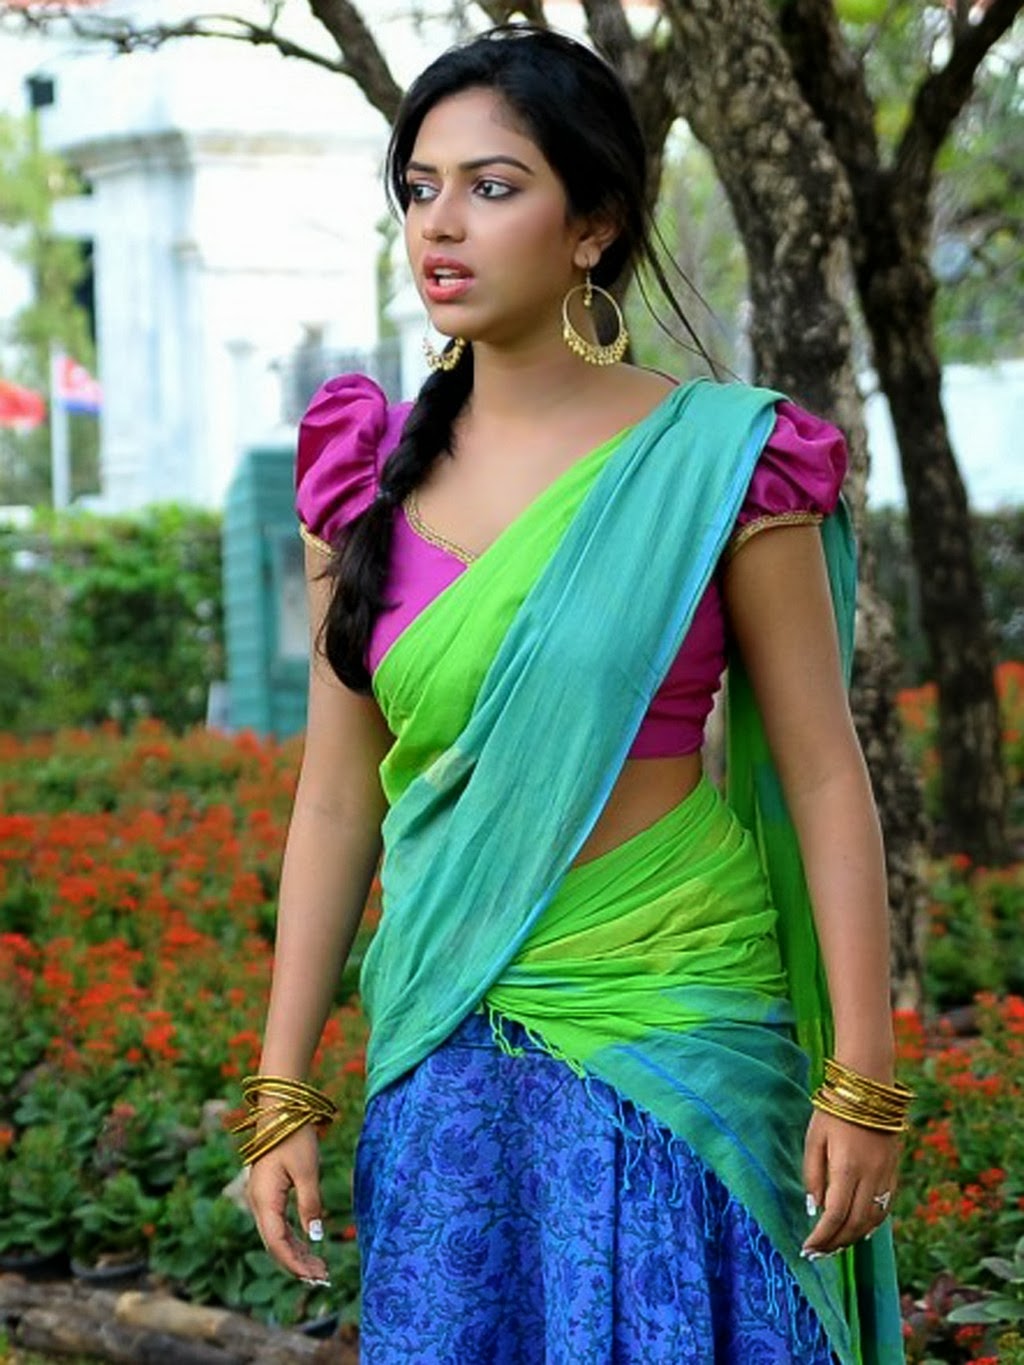 Amala Paul Hot in Colorful Half Saree - KOLLYWOODLIVE 